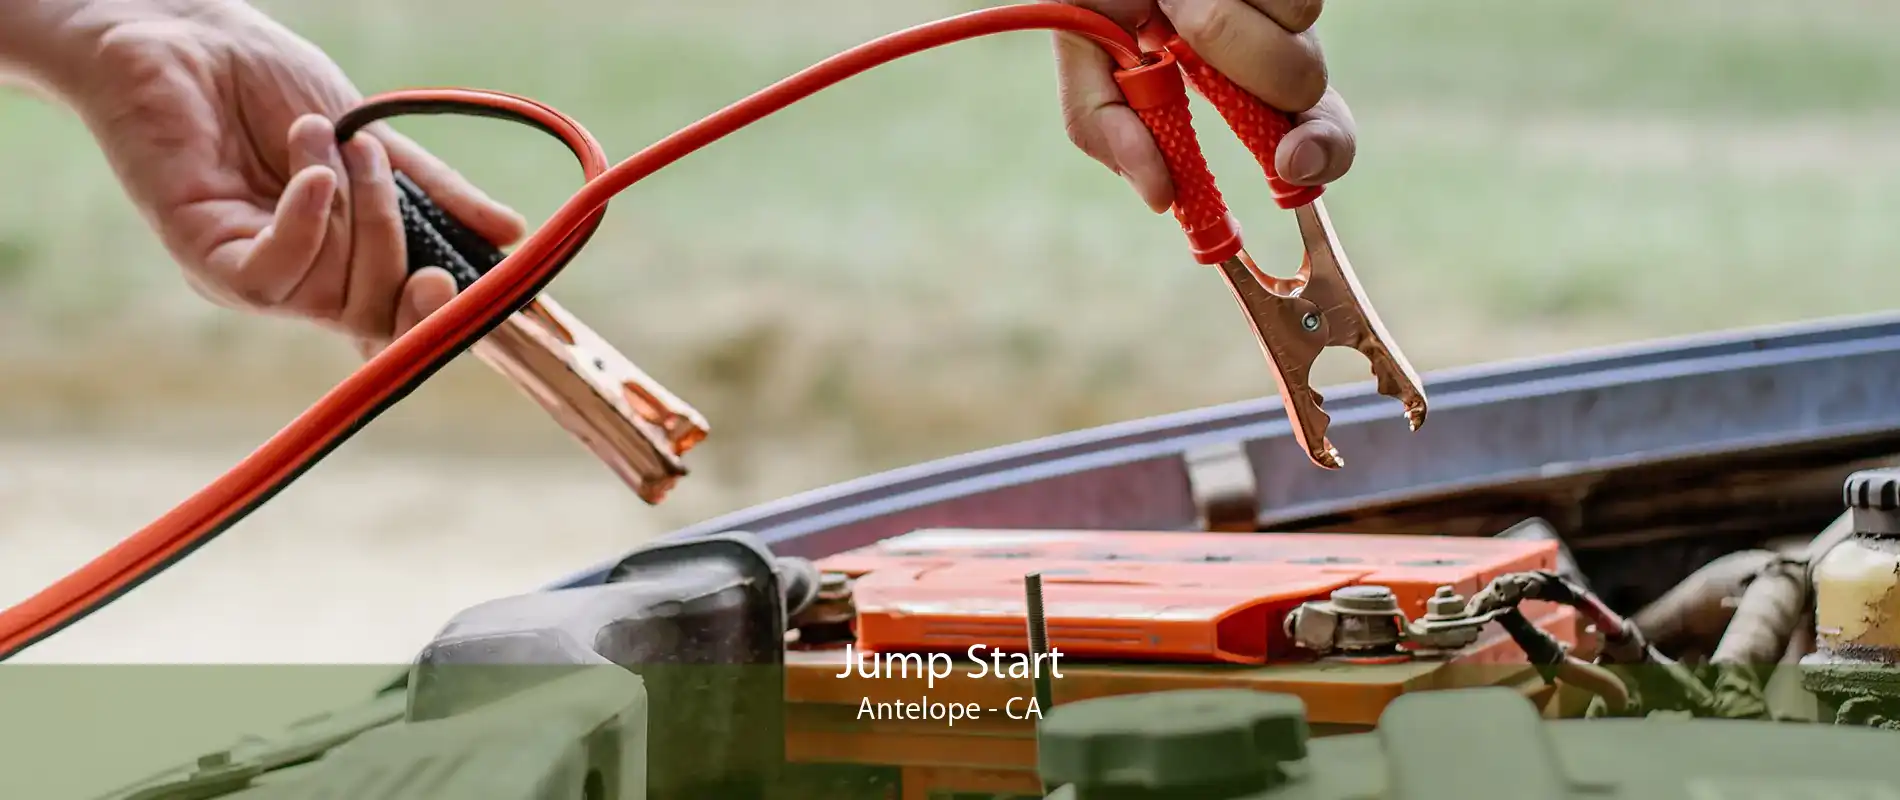 Jump Start Antelope - CA